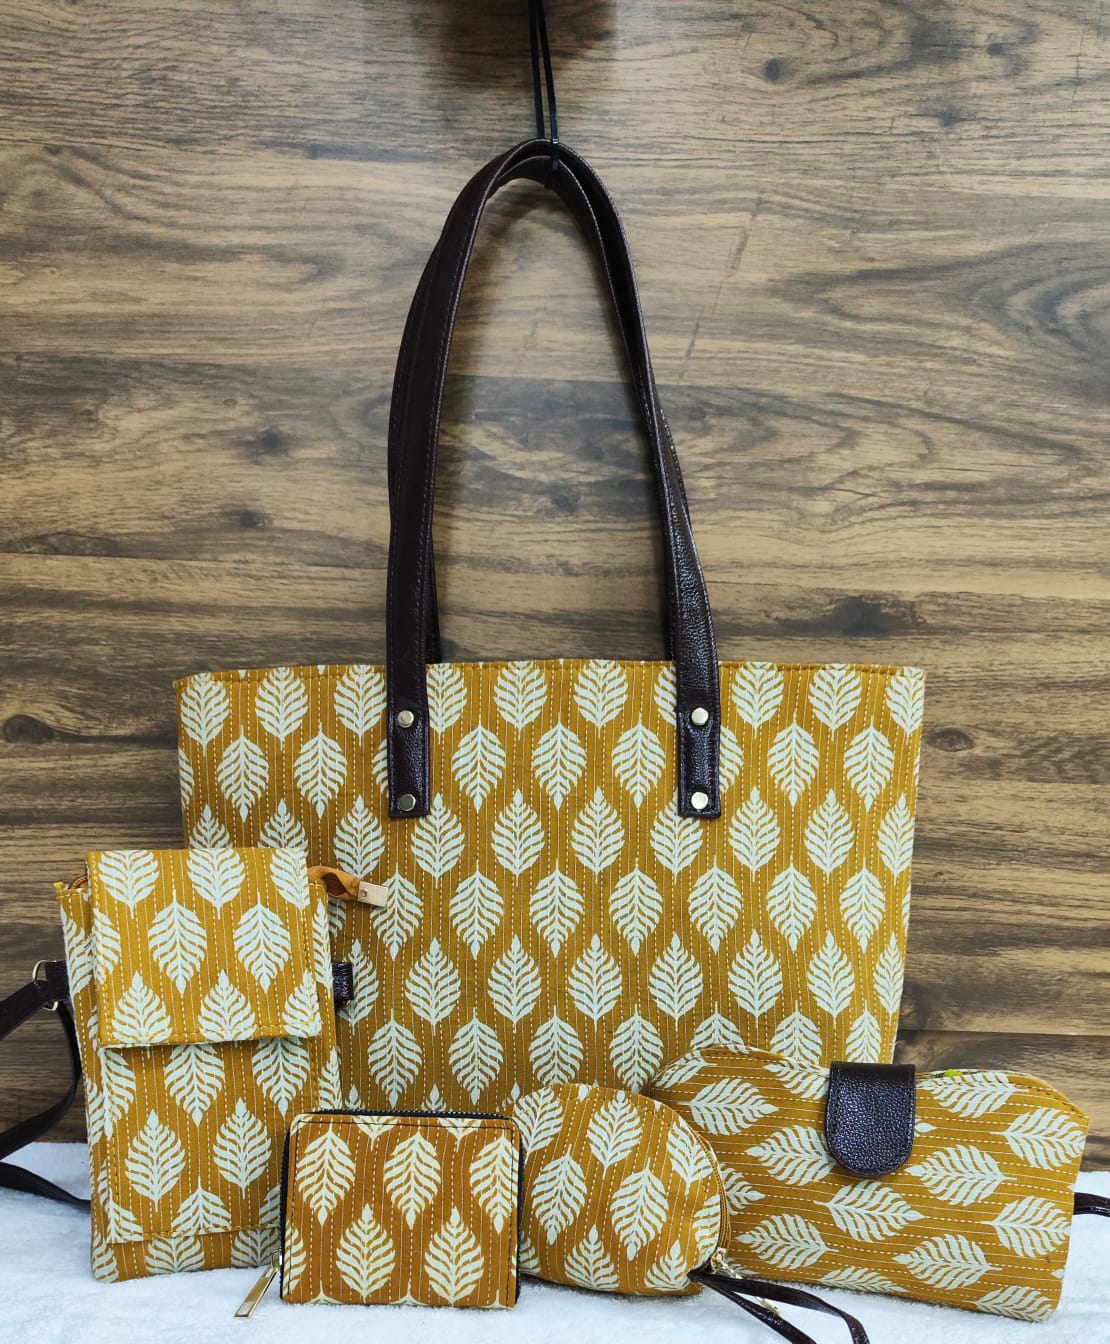 PRADA Handbags 👜💕 7 pcs combo set... - The.Fashion.Store | Facebook